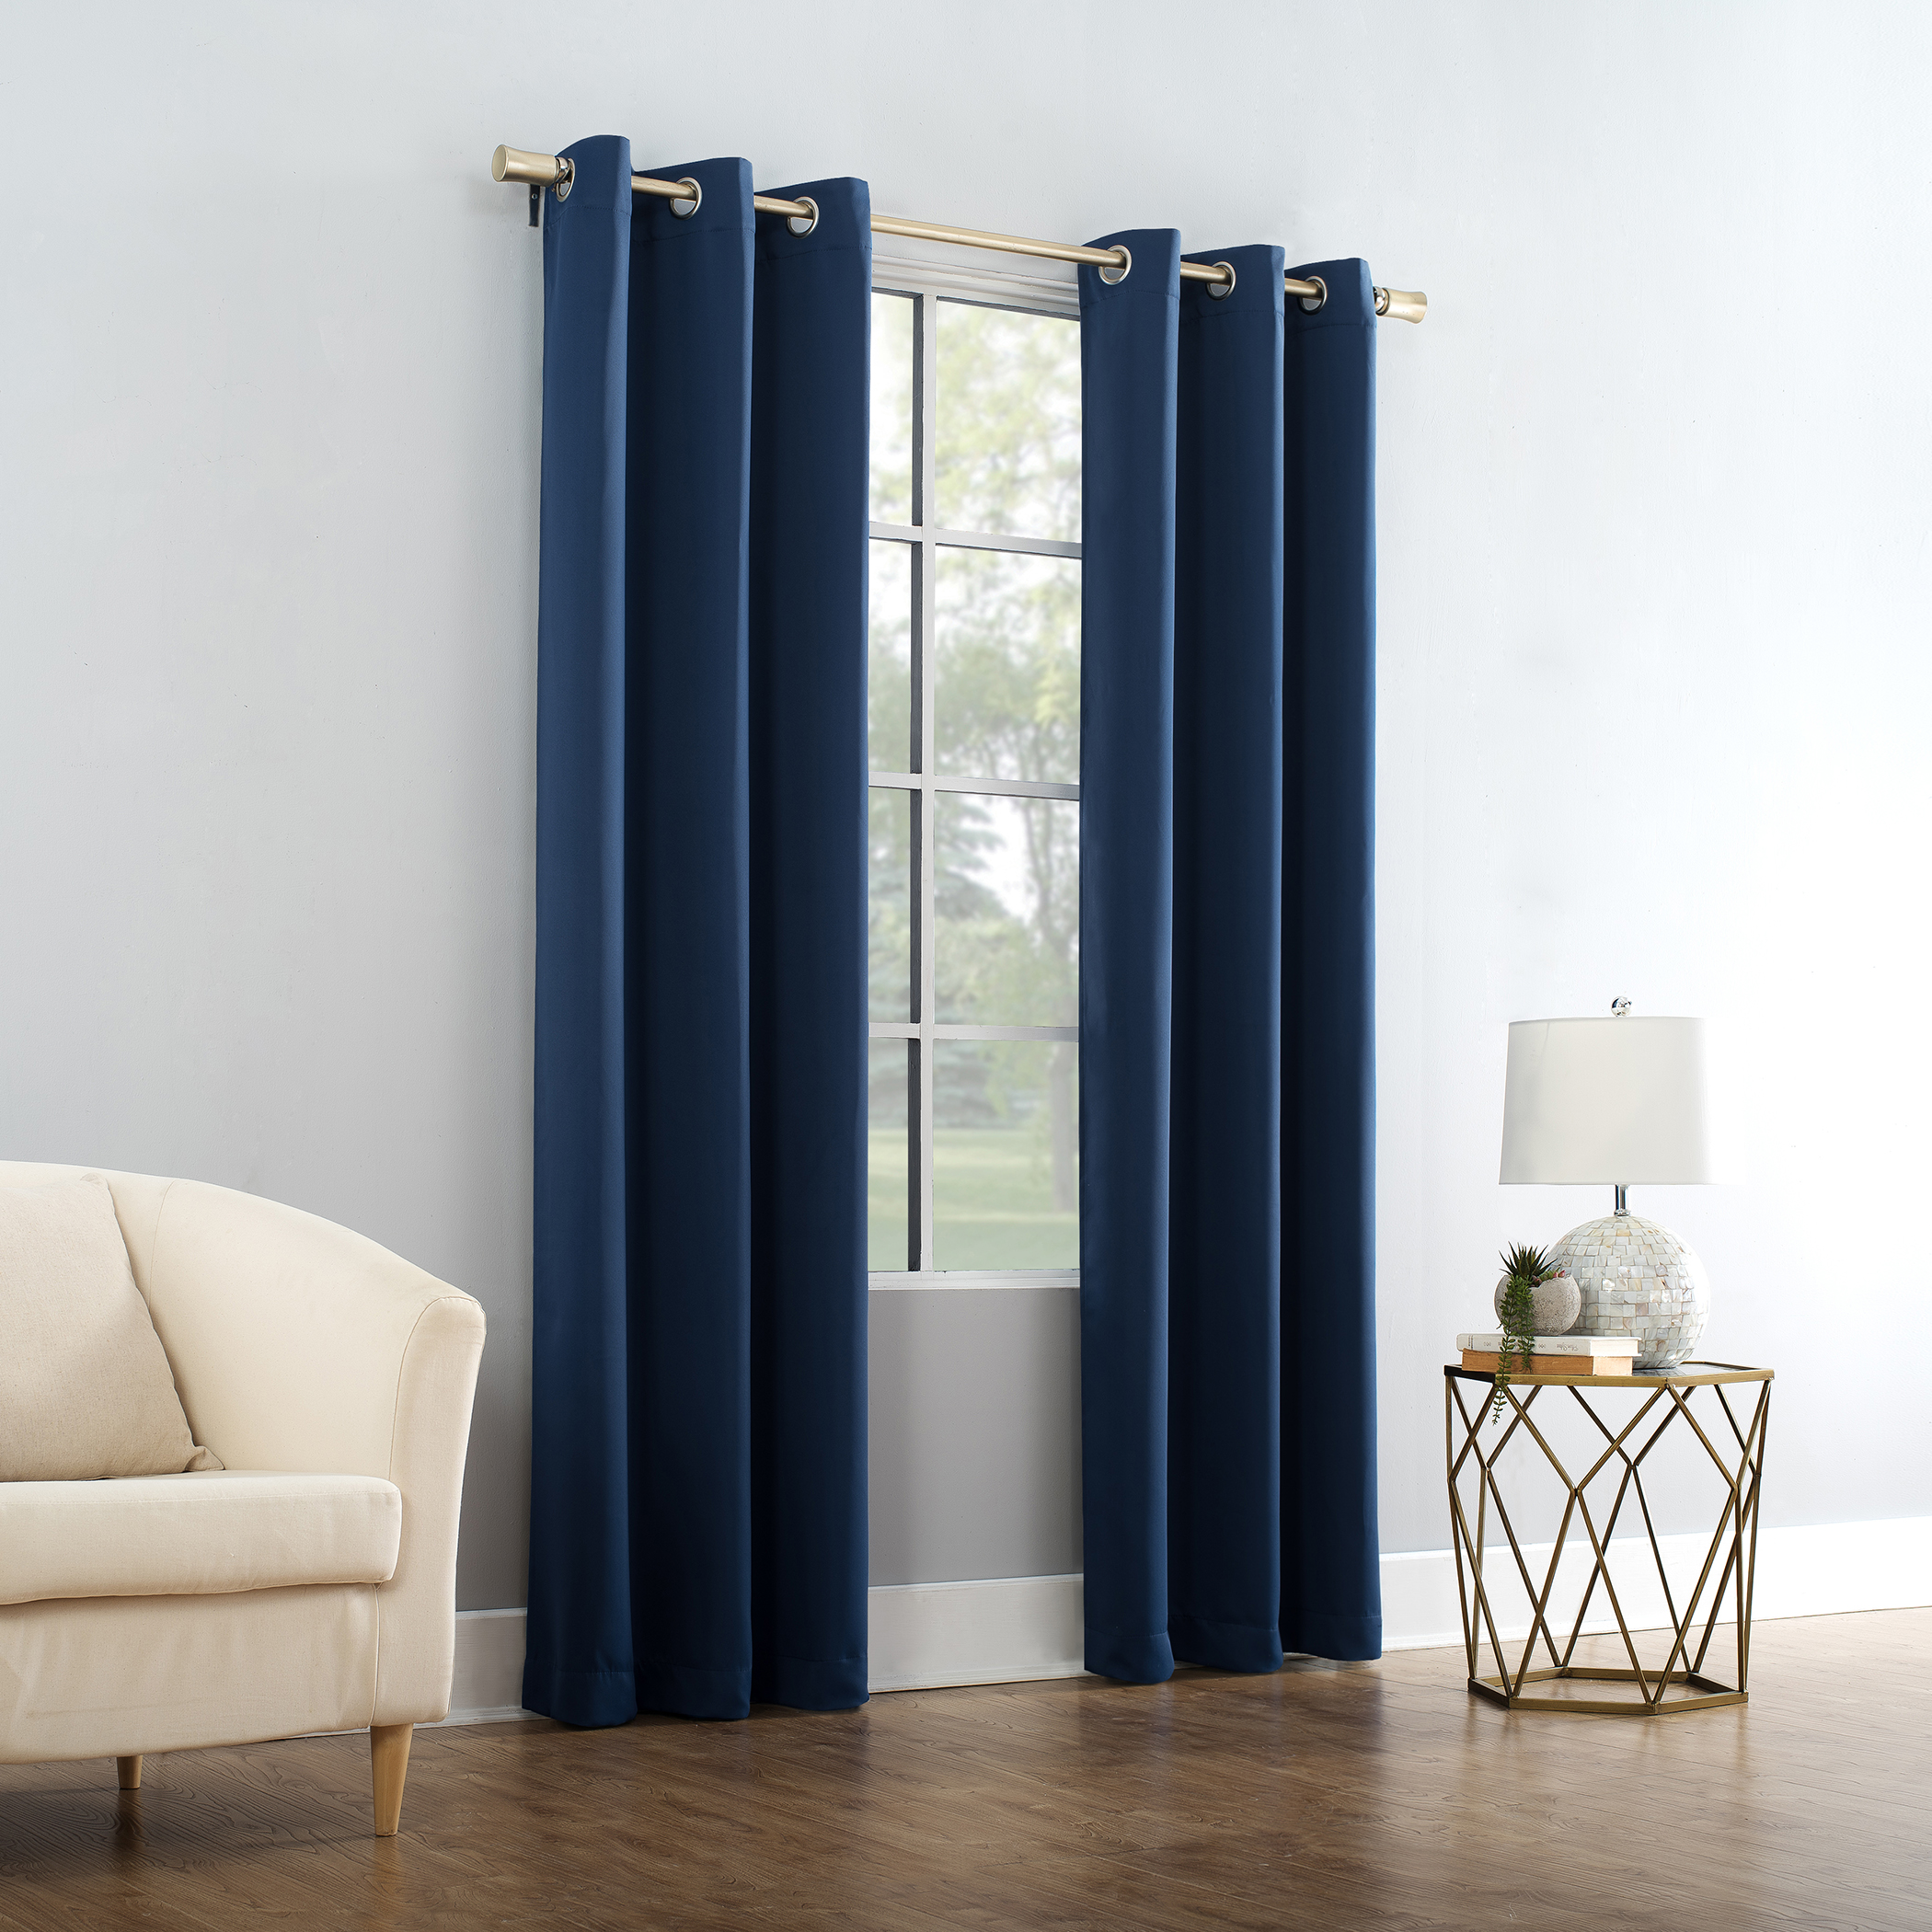 Mainstays Blackout Energy Efficient Grommet Single Curtain Panel, 40"x95", Blue - image 1 of 7